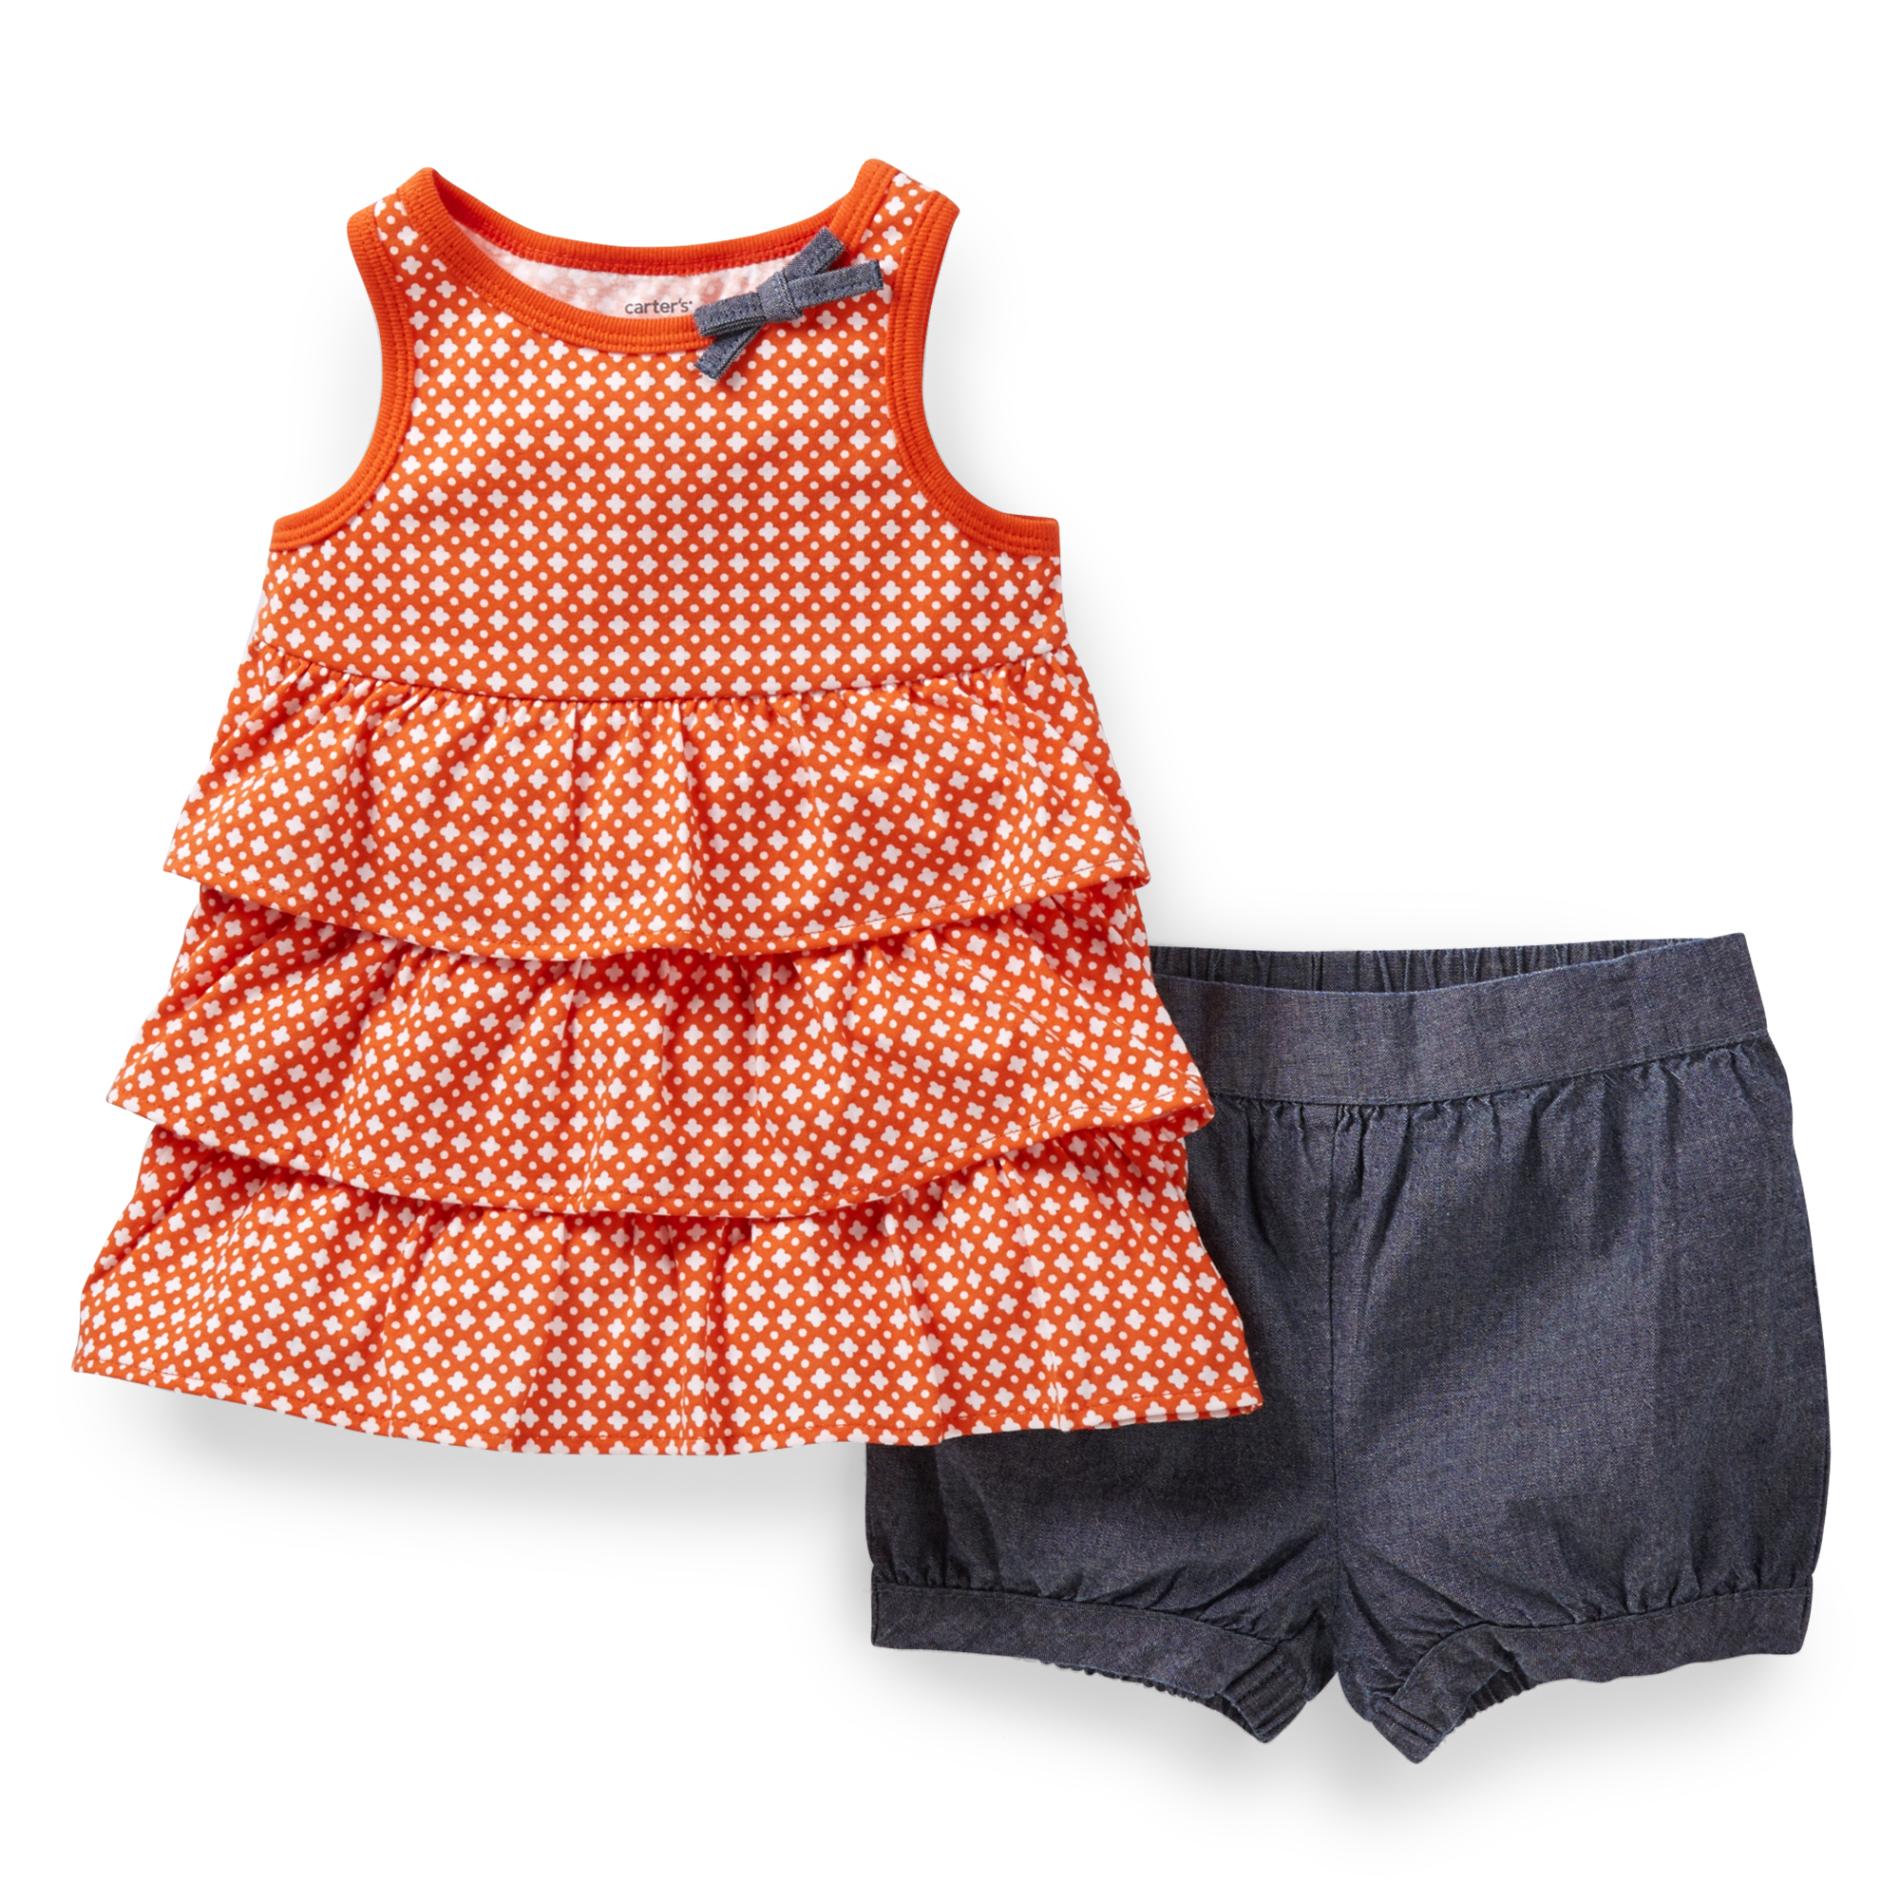 Carter's Newborn & Infant Girl's Ruffle Tunic & Bubble Shorts